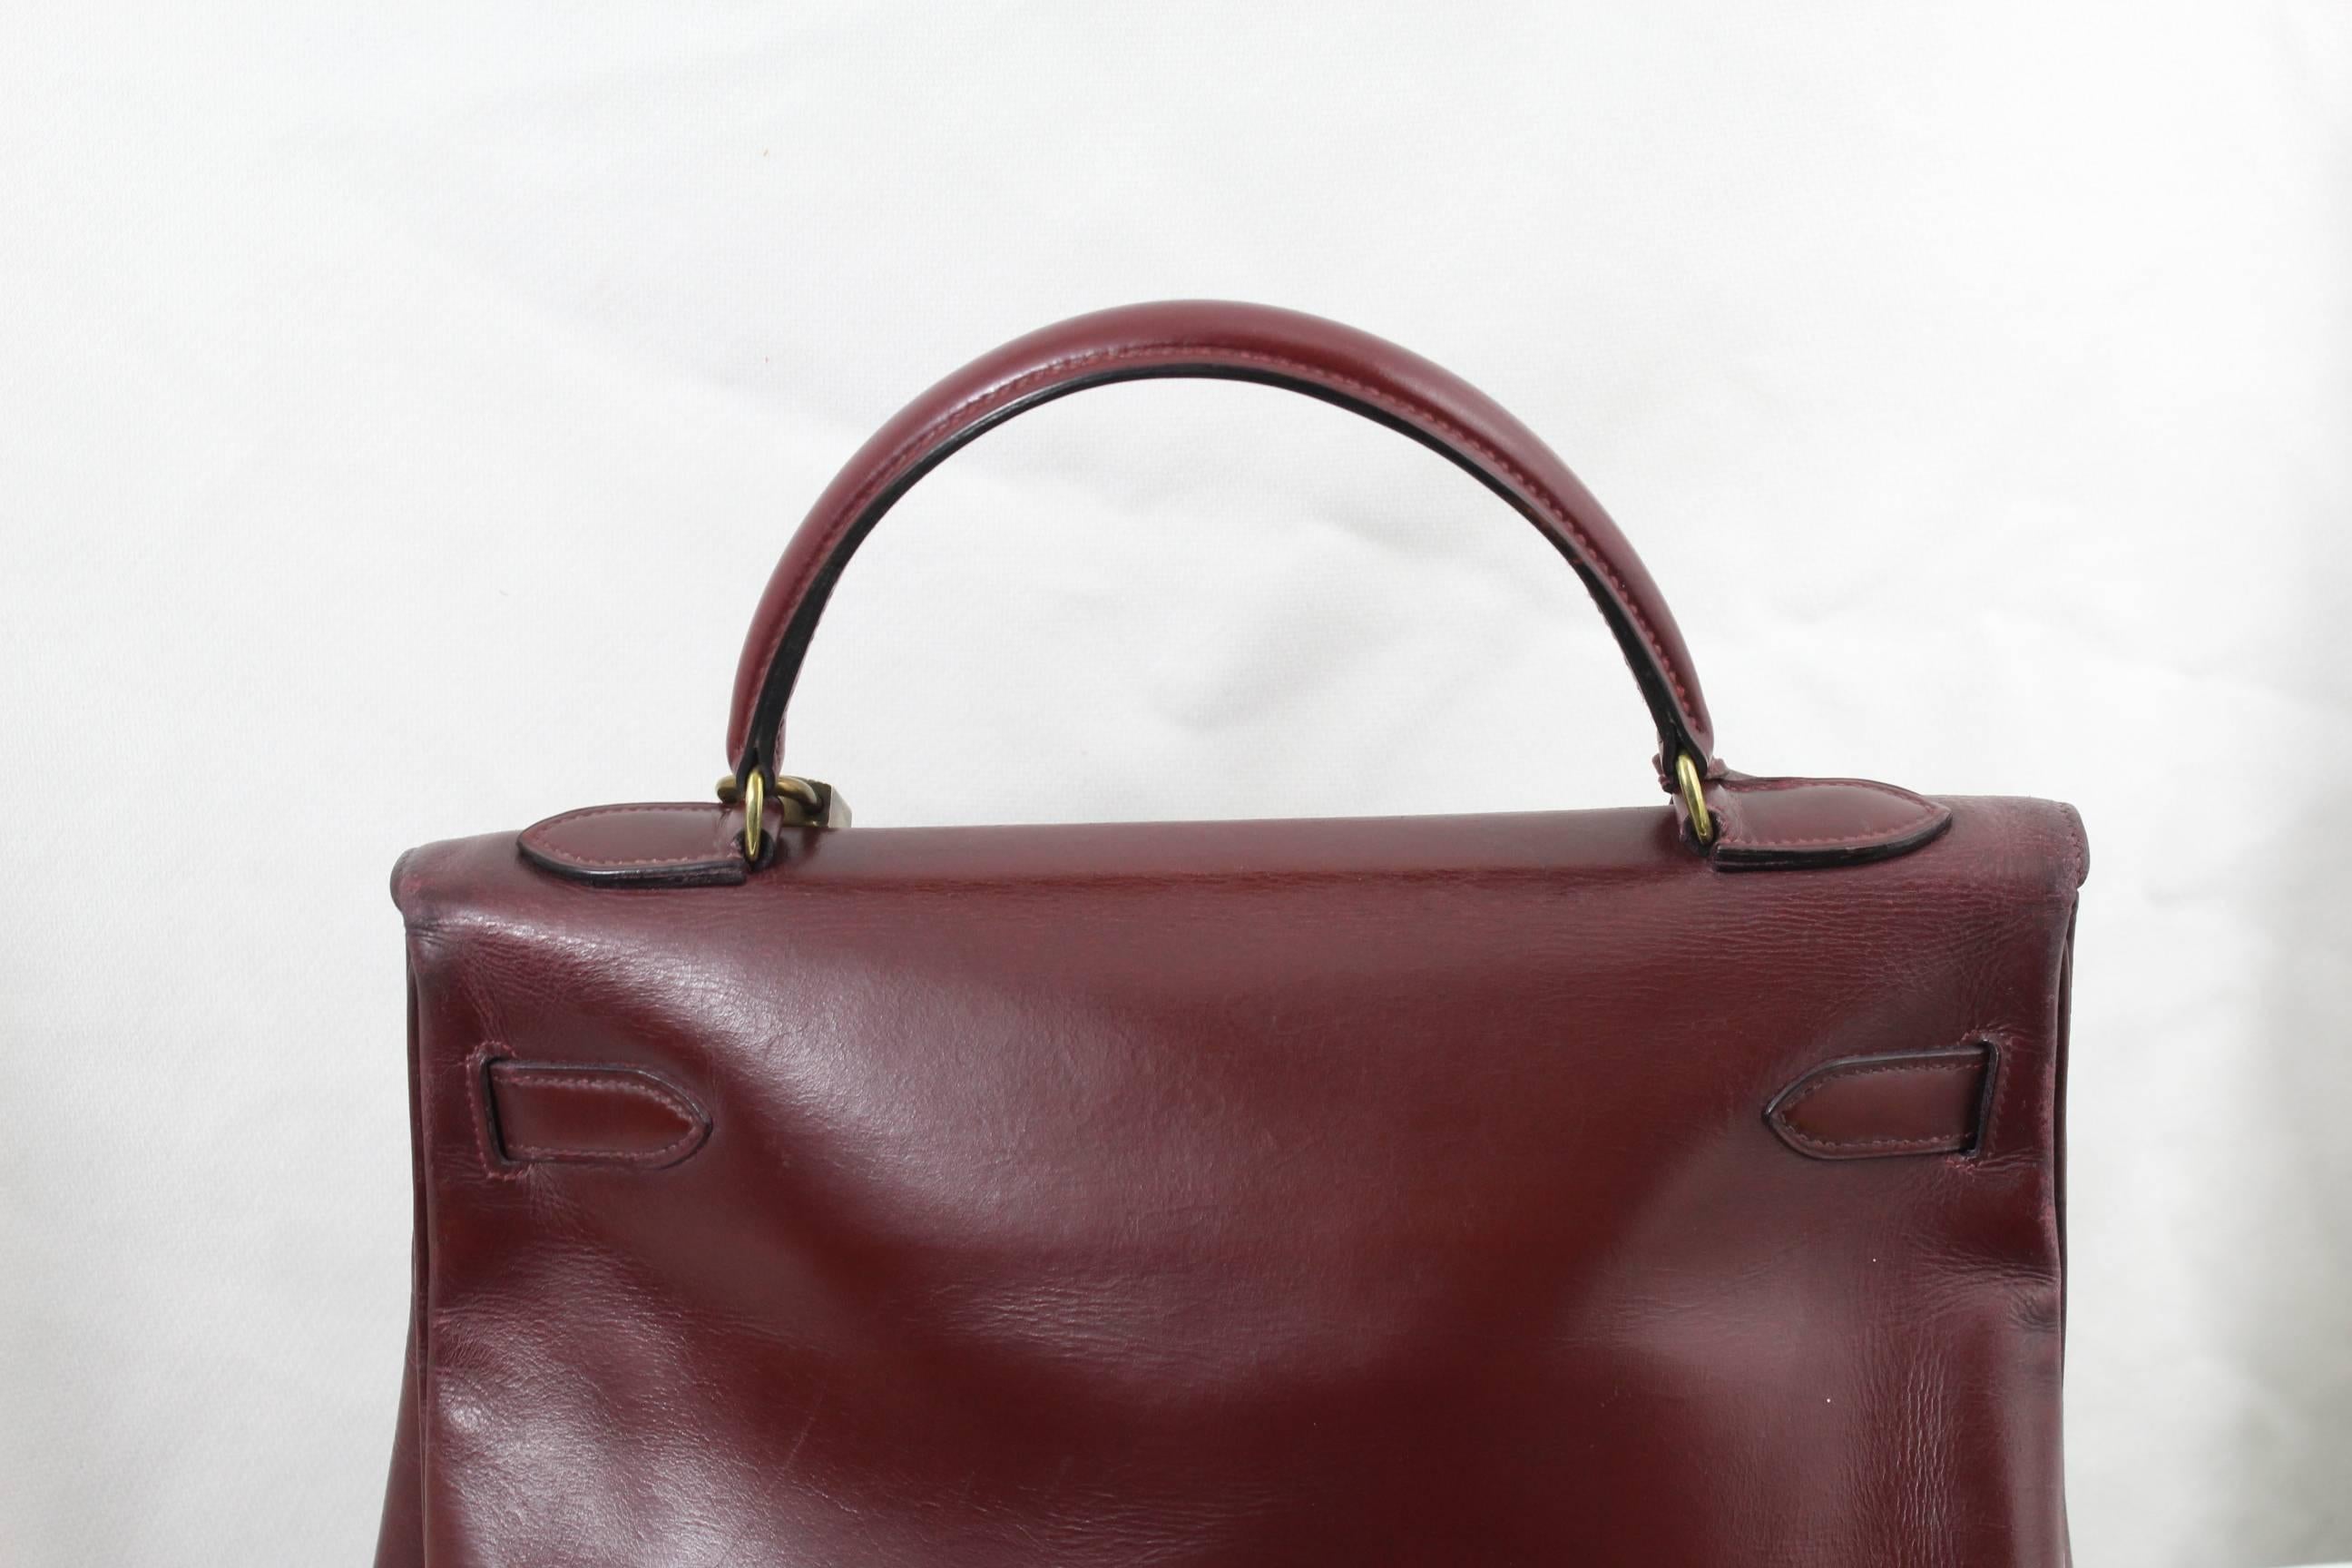 Women's or Men's 1960 Hermes Vintage Kelly Bag in Burgundy Leather with Golden Hardware